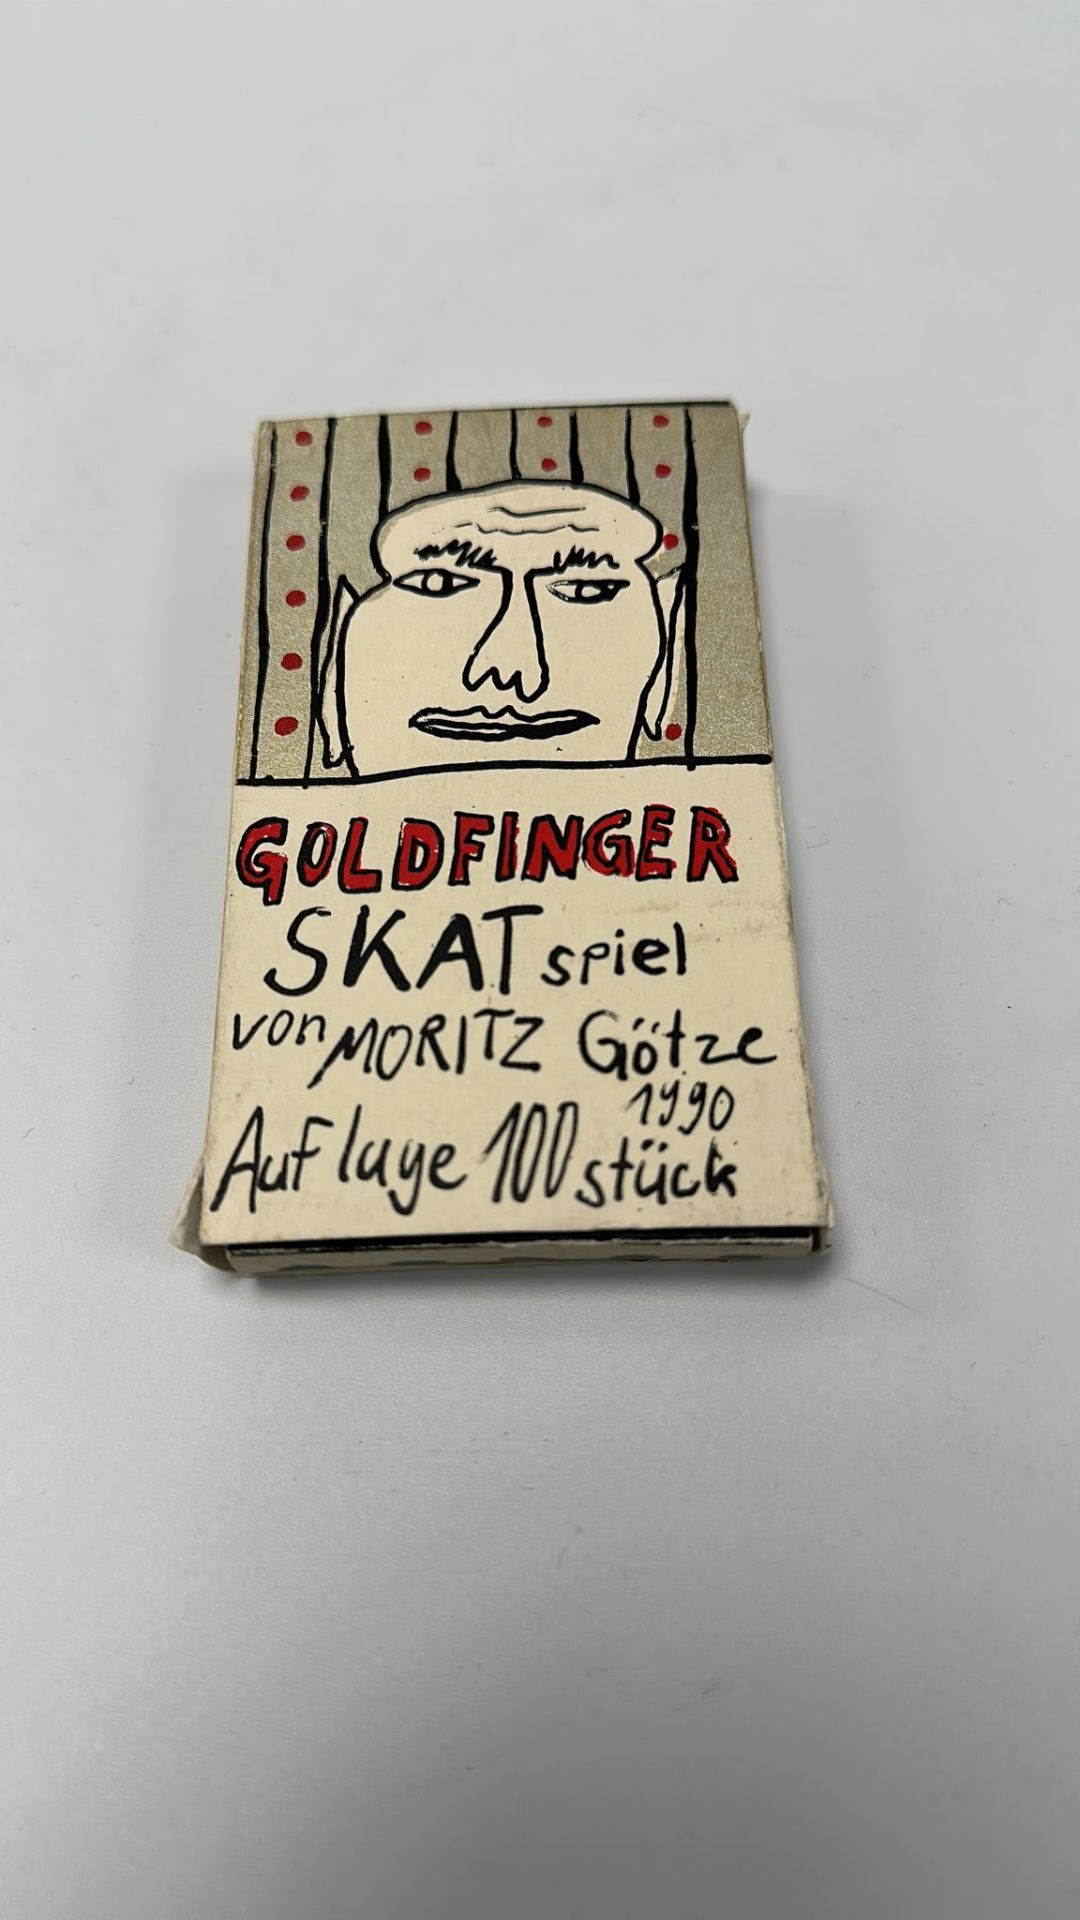 Skatspiel "Goldfinger" (Moritz Götze, 1990) - Bild 2 aus 6